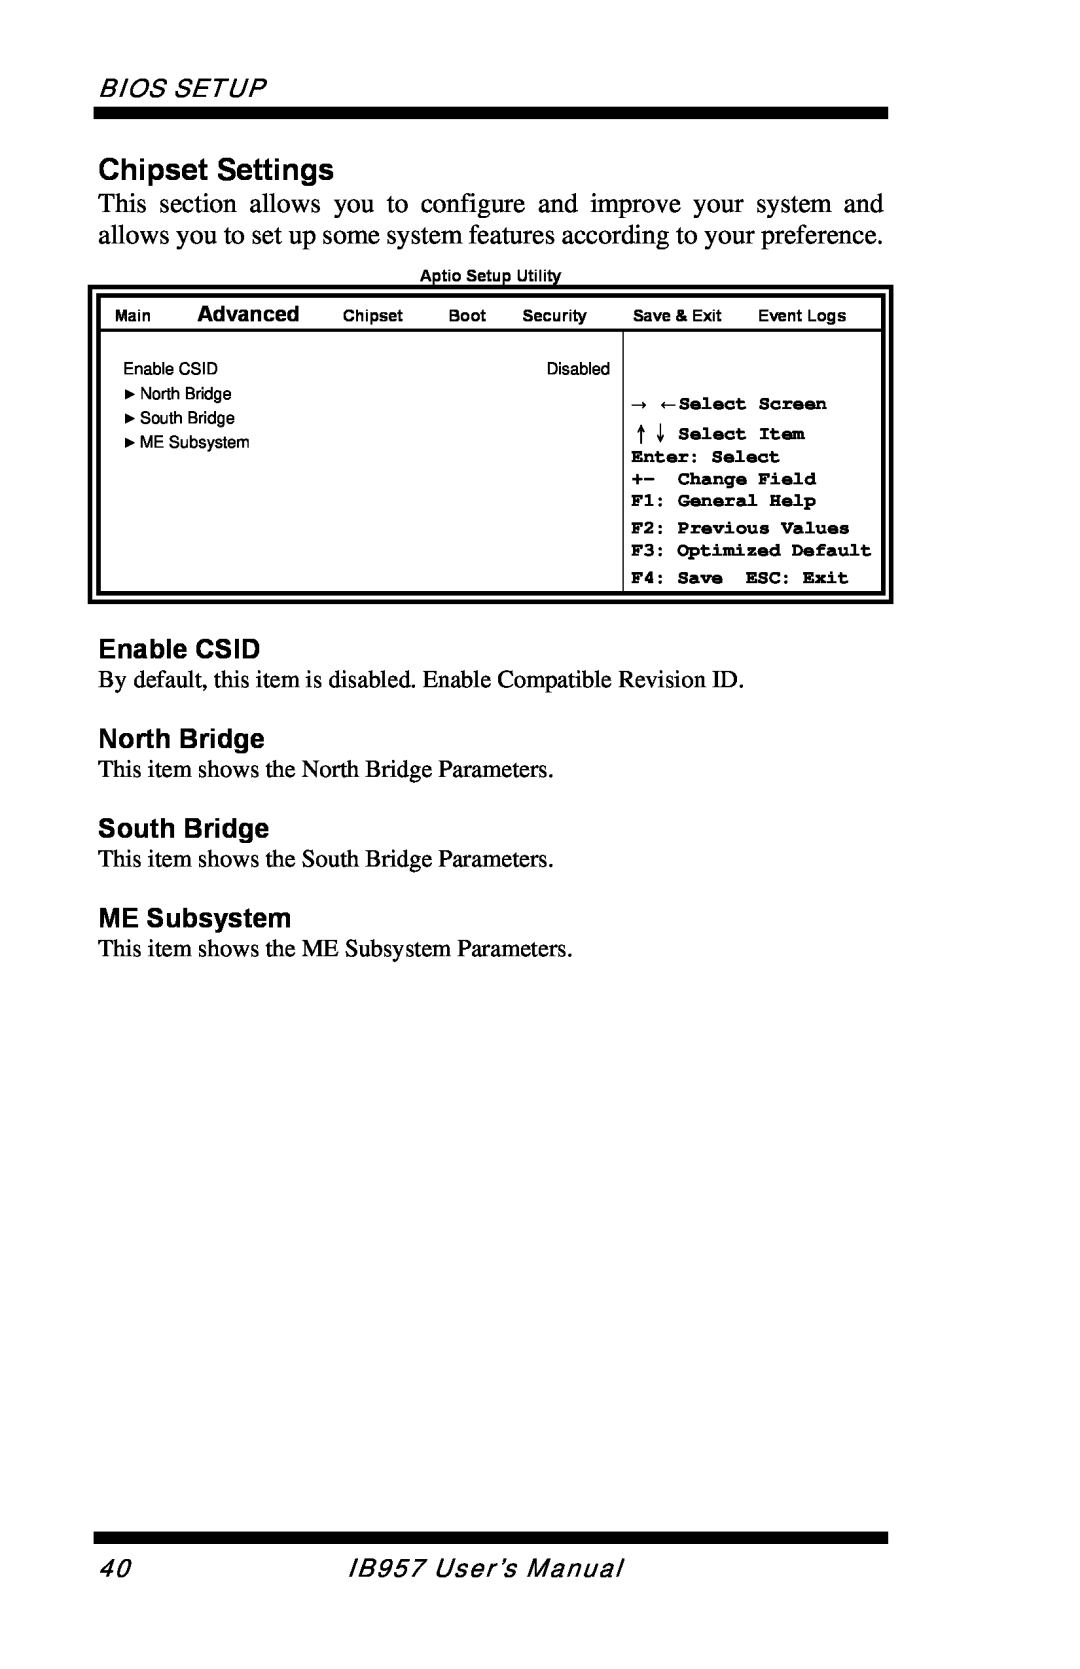 Intel Chipset Settings, Enable CSID, North Bridge, South Bridge, ME Subsystem, Bios Setup, IB957 User’s Manual 